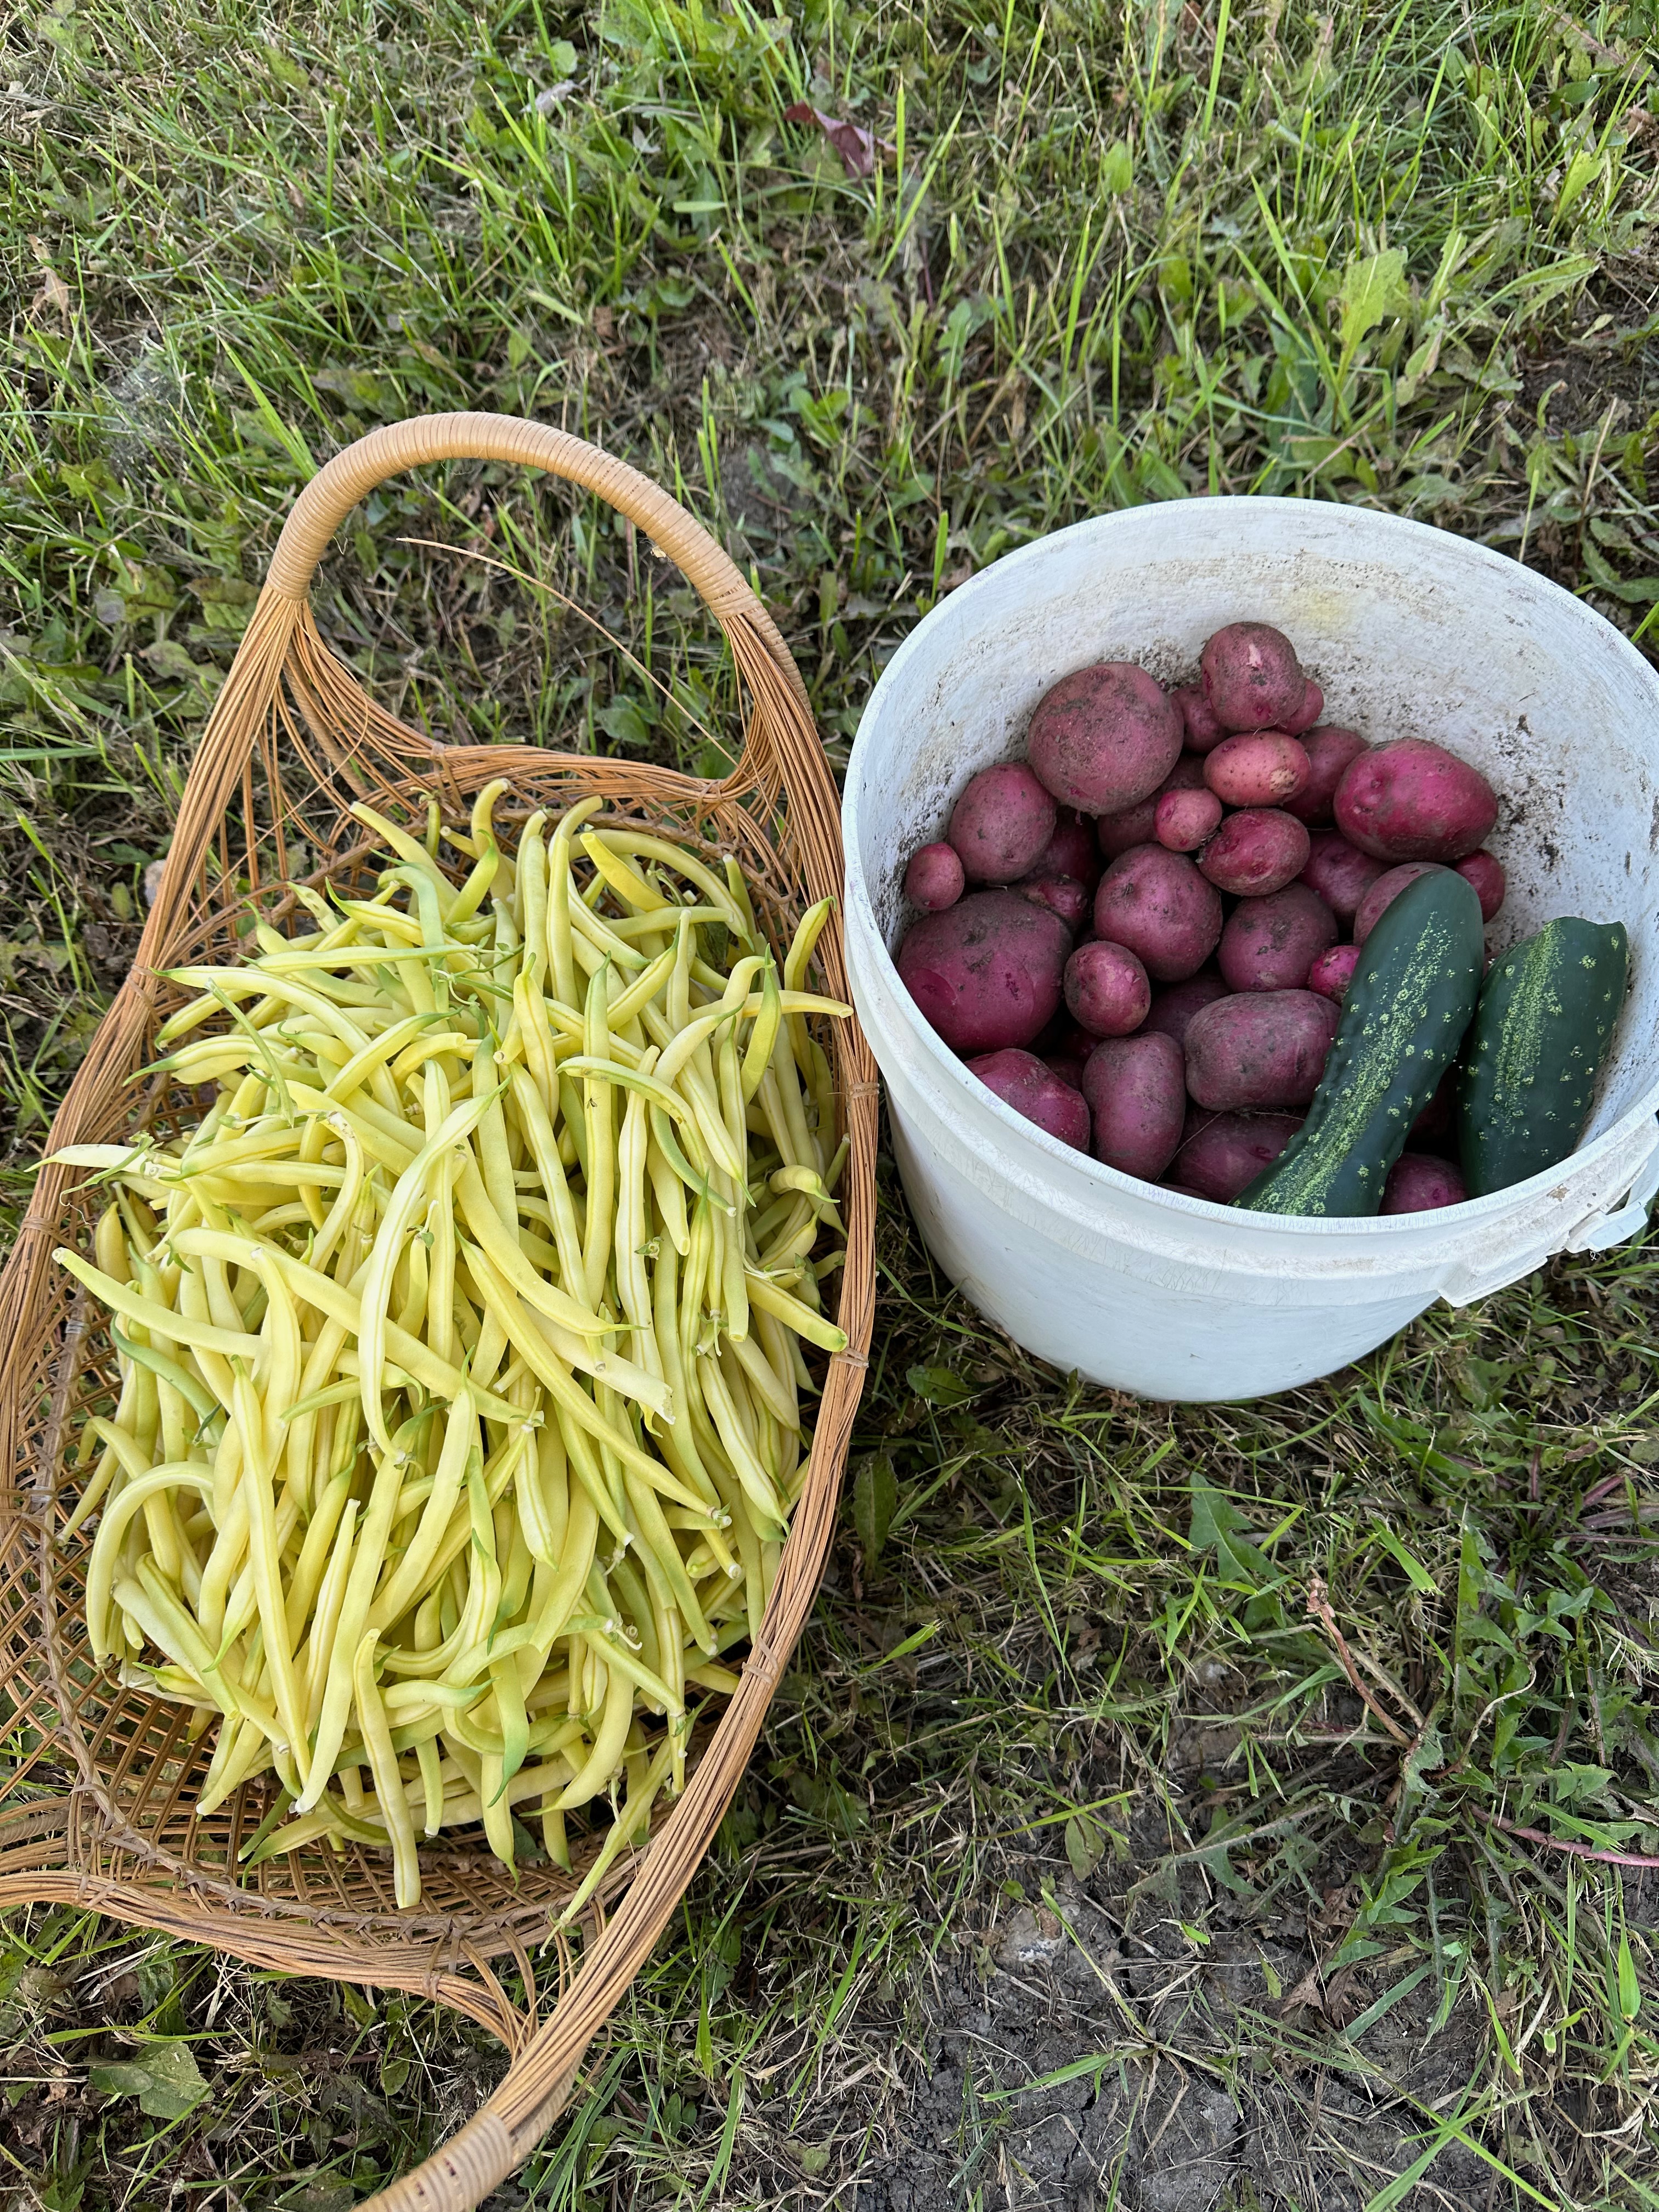 Wax beans, potato harvest